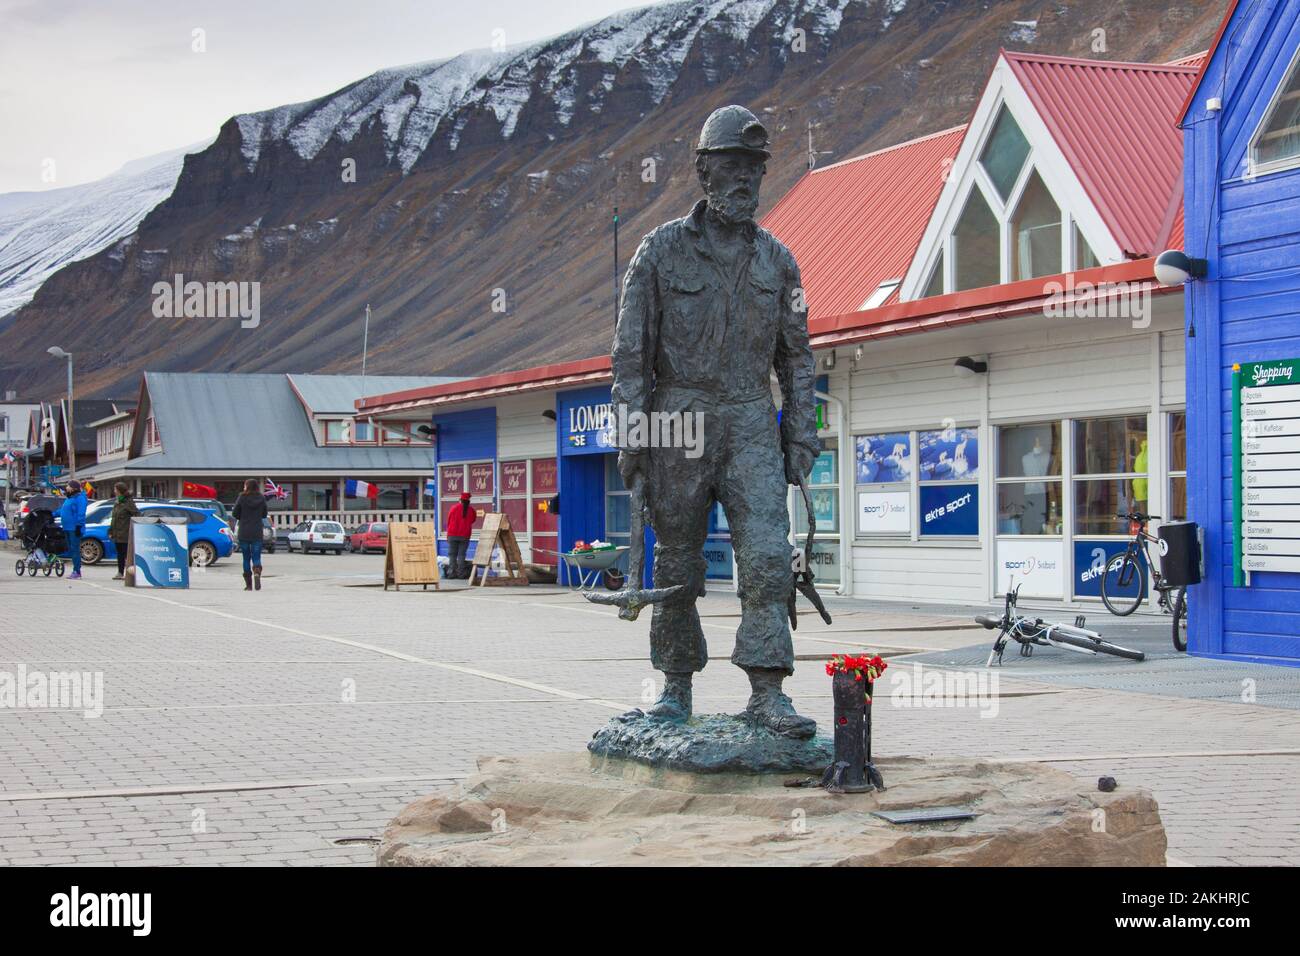 Statua del minatore, carbone dei minatori Memorial creato da Tore Bjorn Skjølsvik nella città Longyearbyen, Svalbard / Spitsbergen, Norvegia Foto Stock